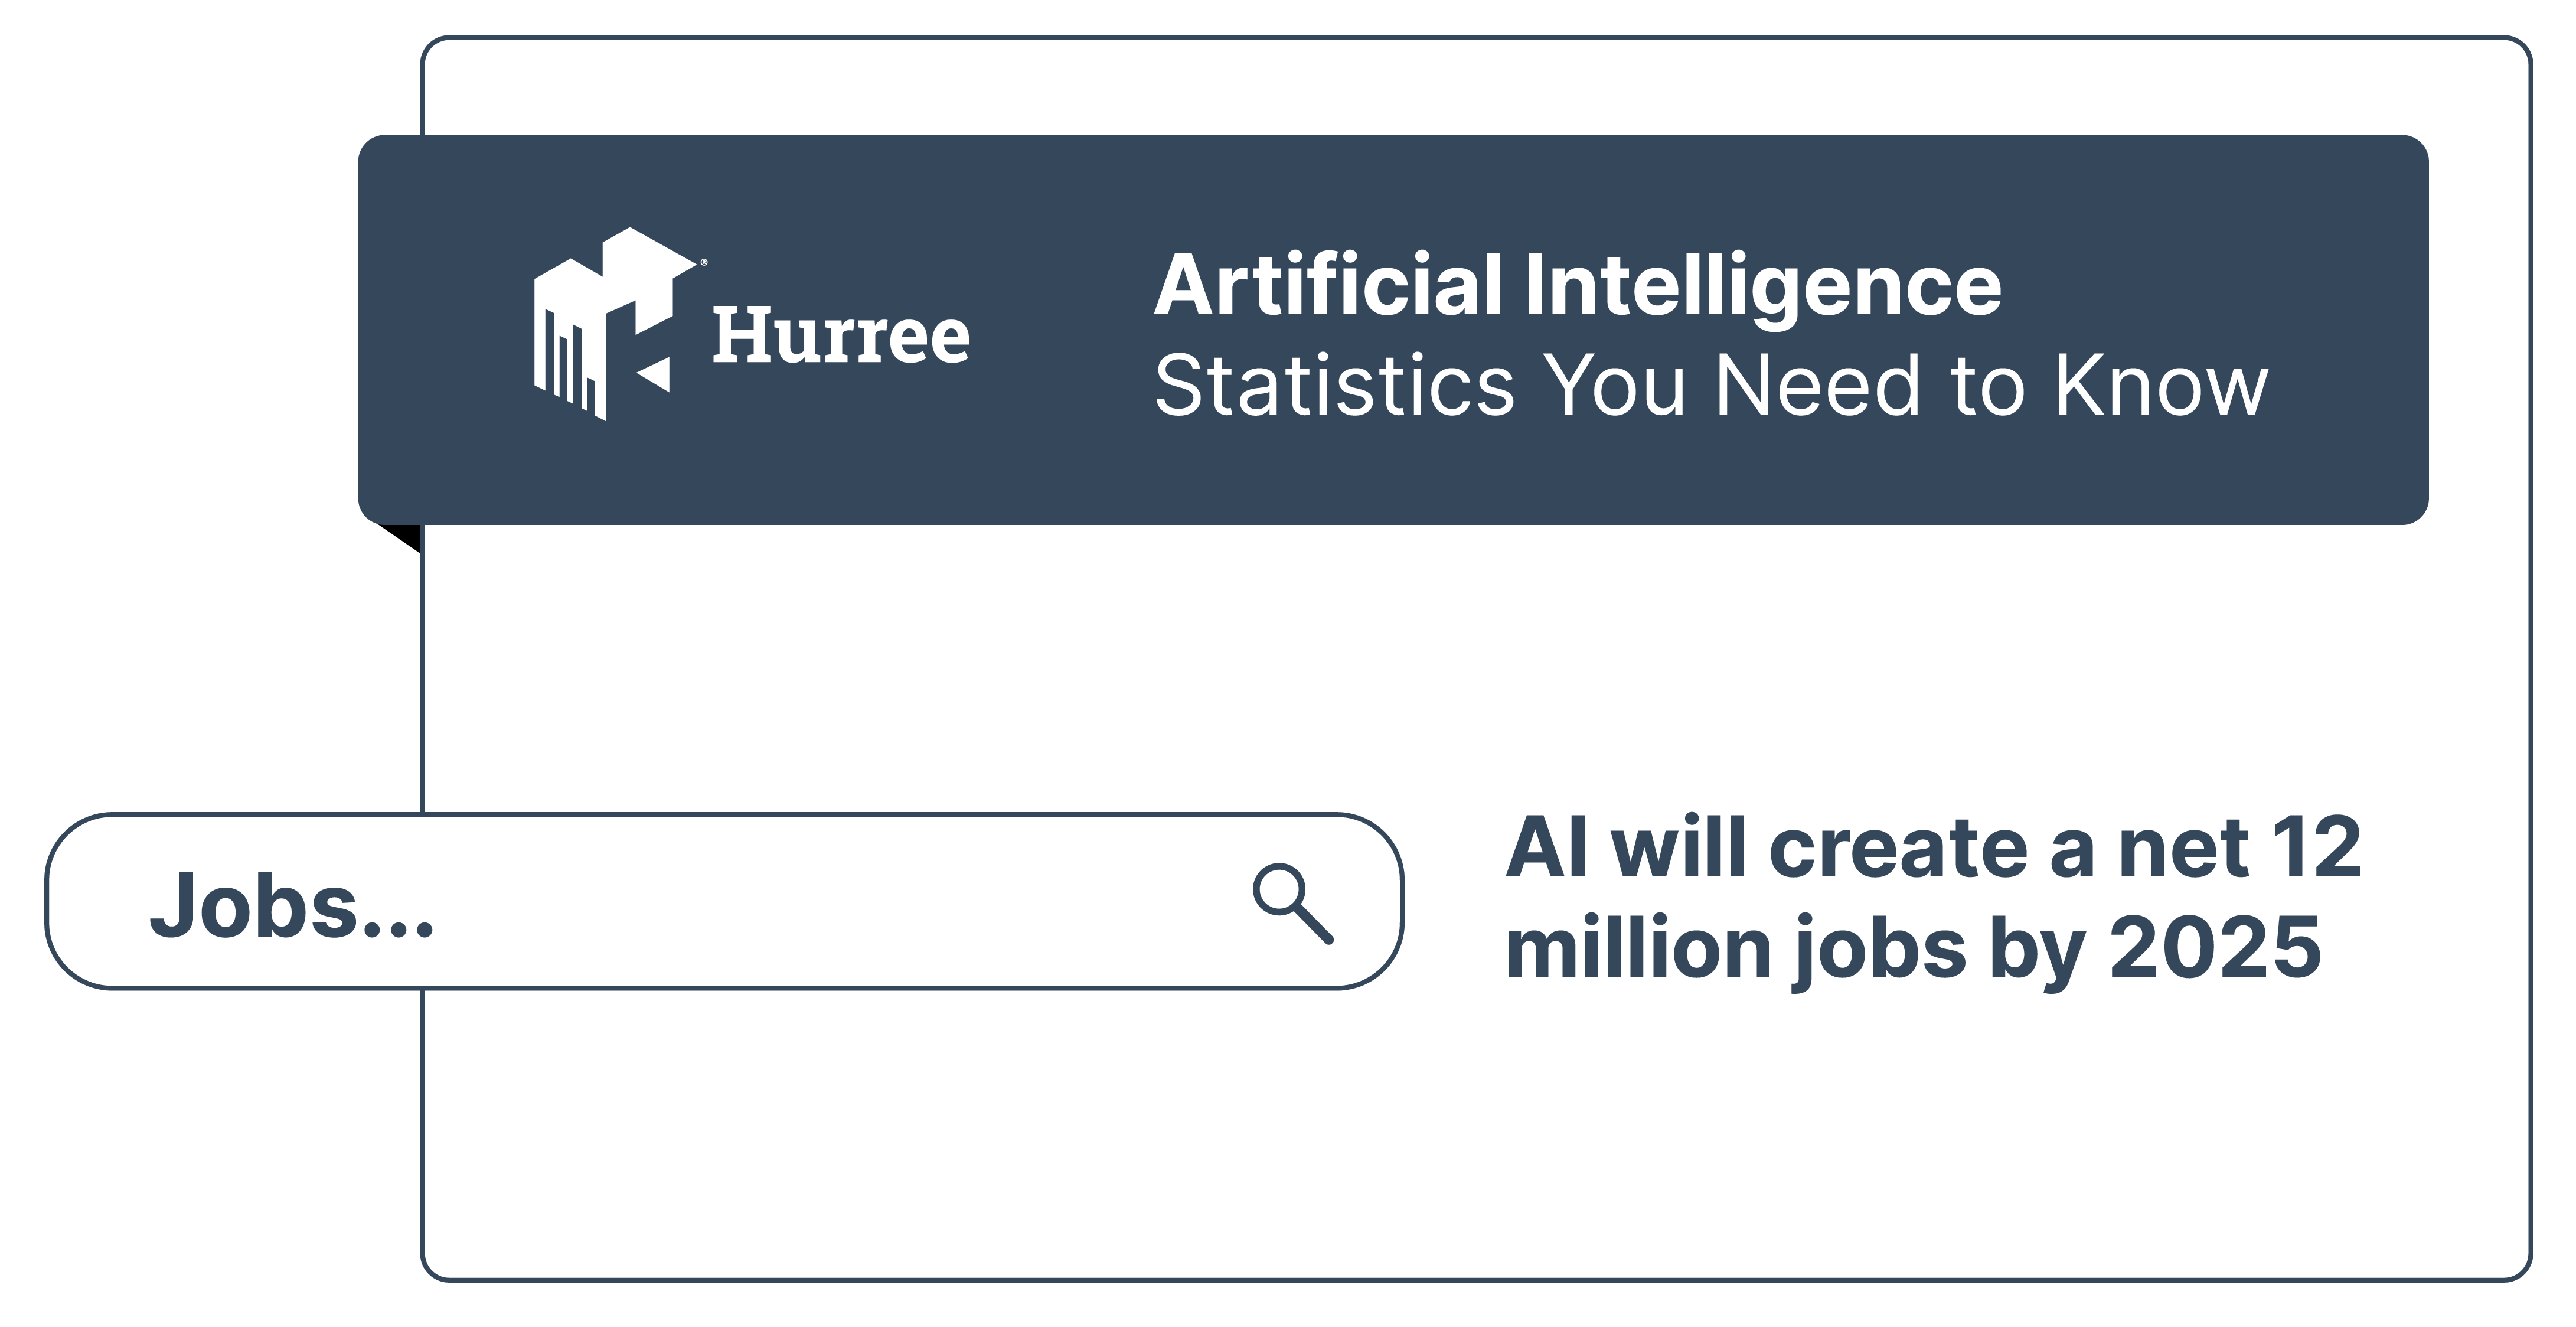 AI will create a net 12 million jobs by 2025